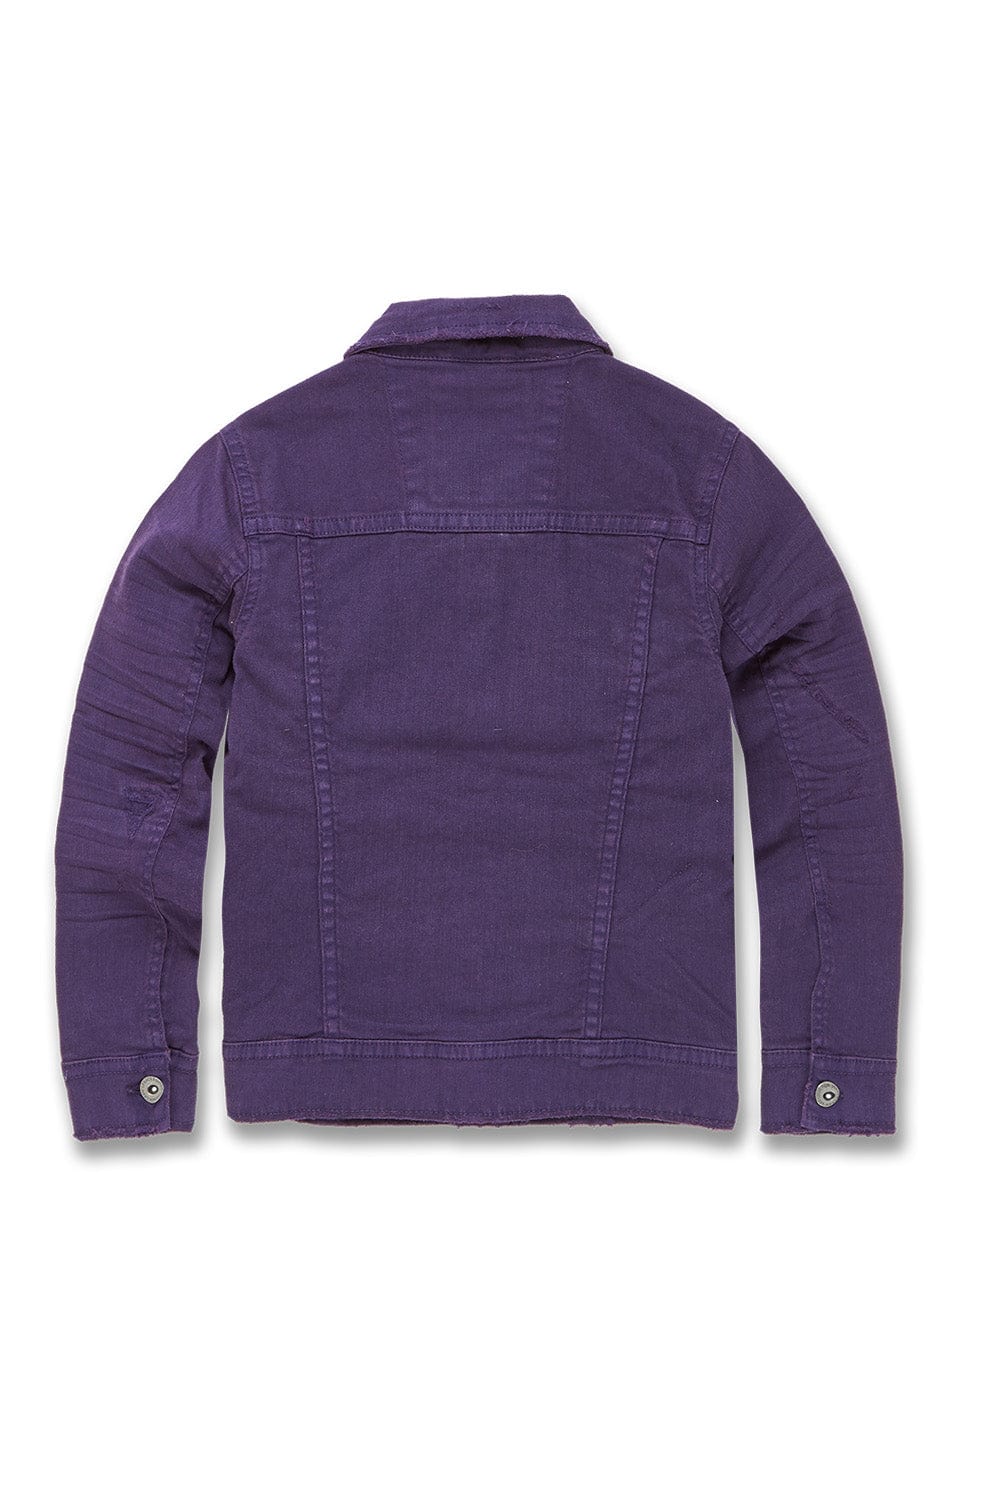 JC Kids Kids Tribeca Twill Trucker Jacket (Court Purple)